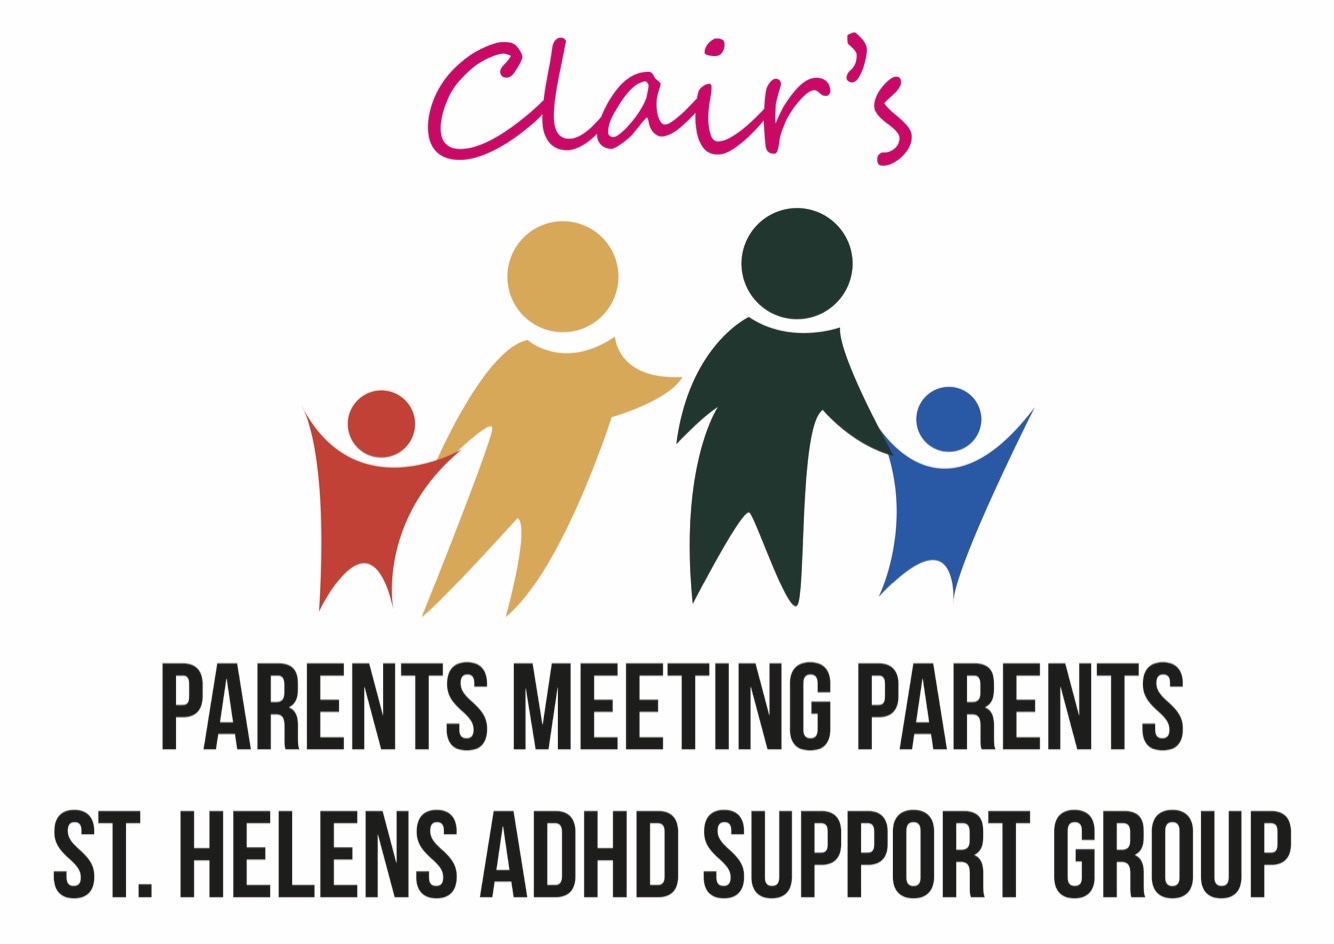 Clair's Parents Meeting Parents ADHD